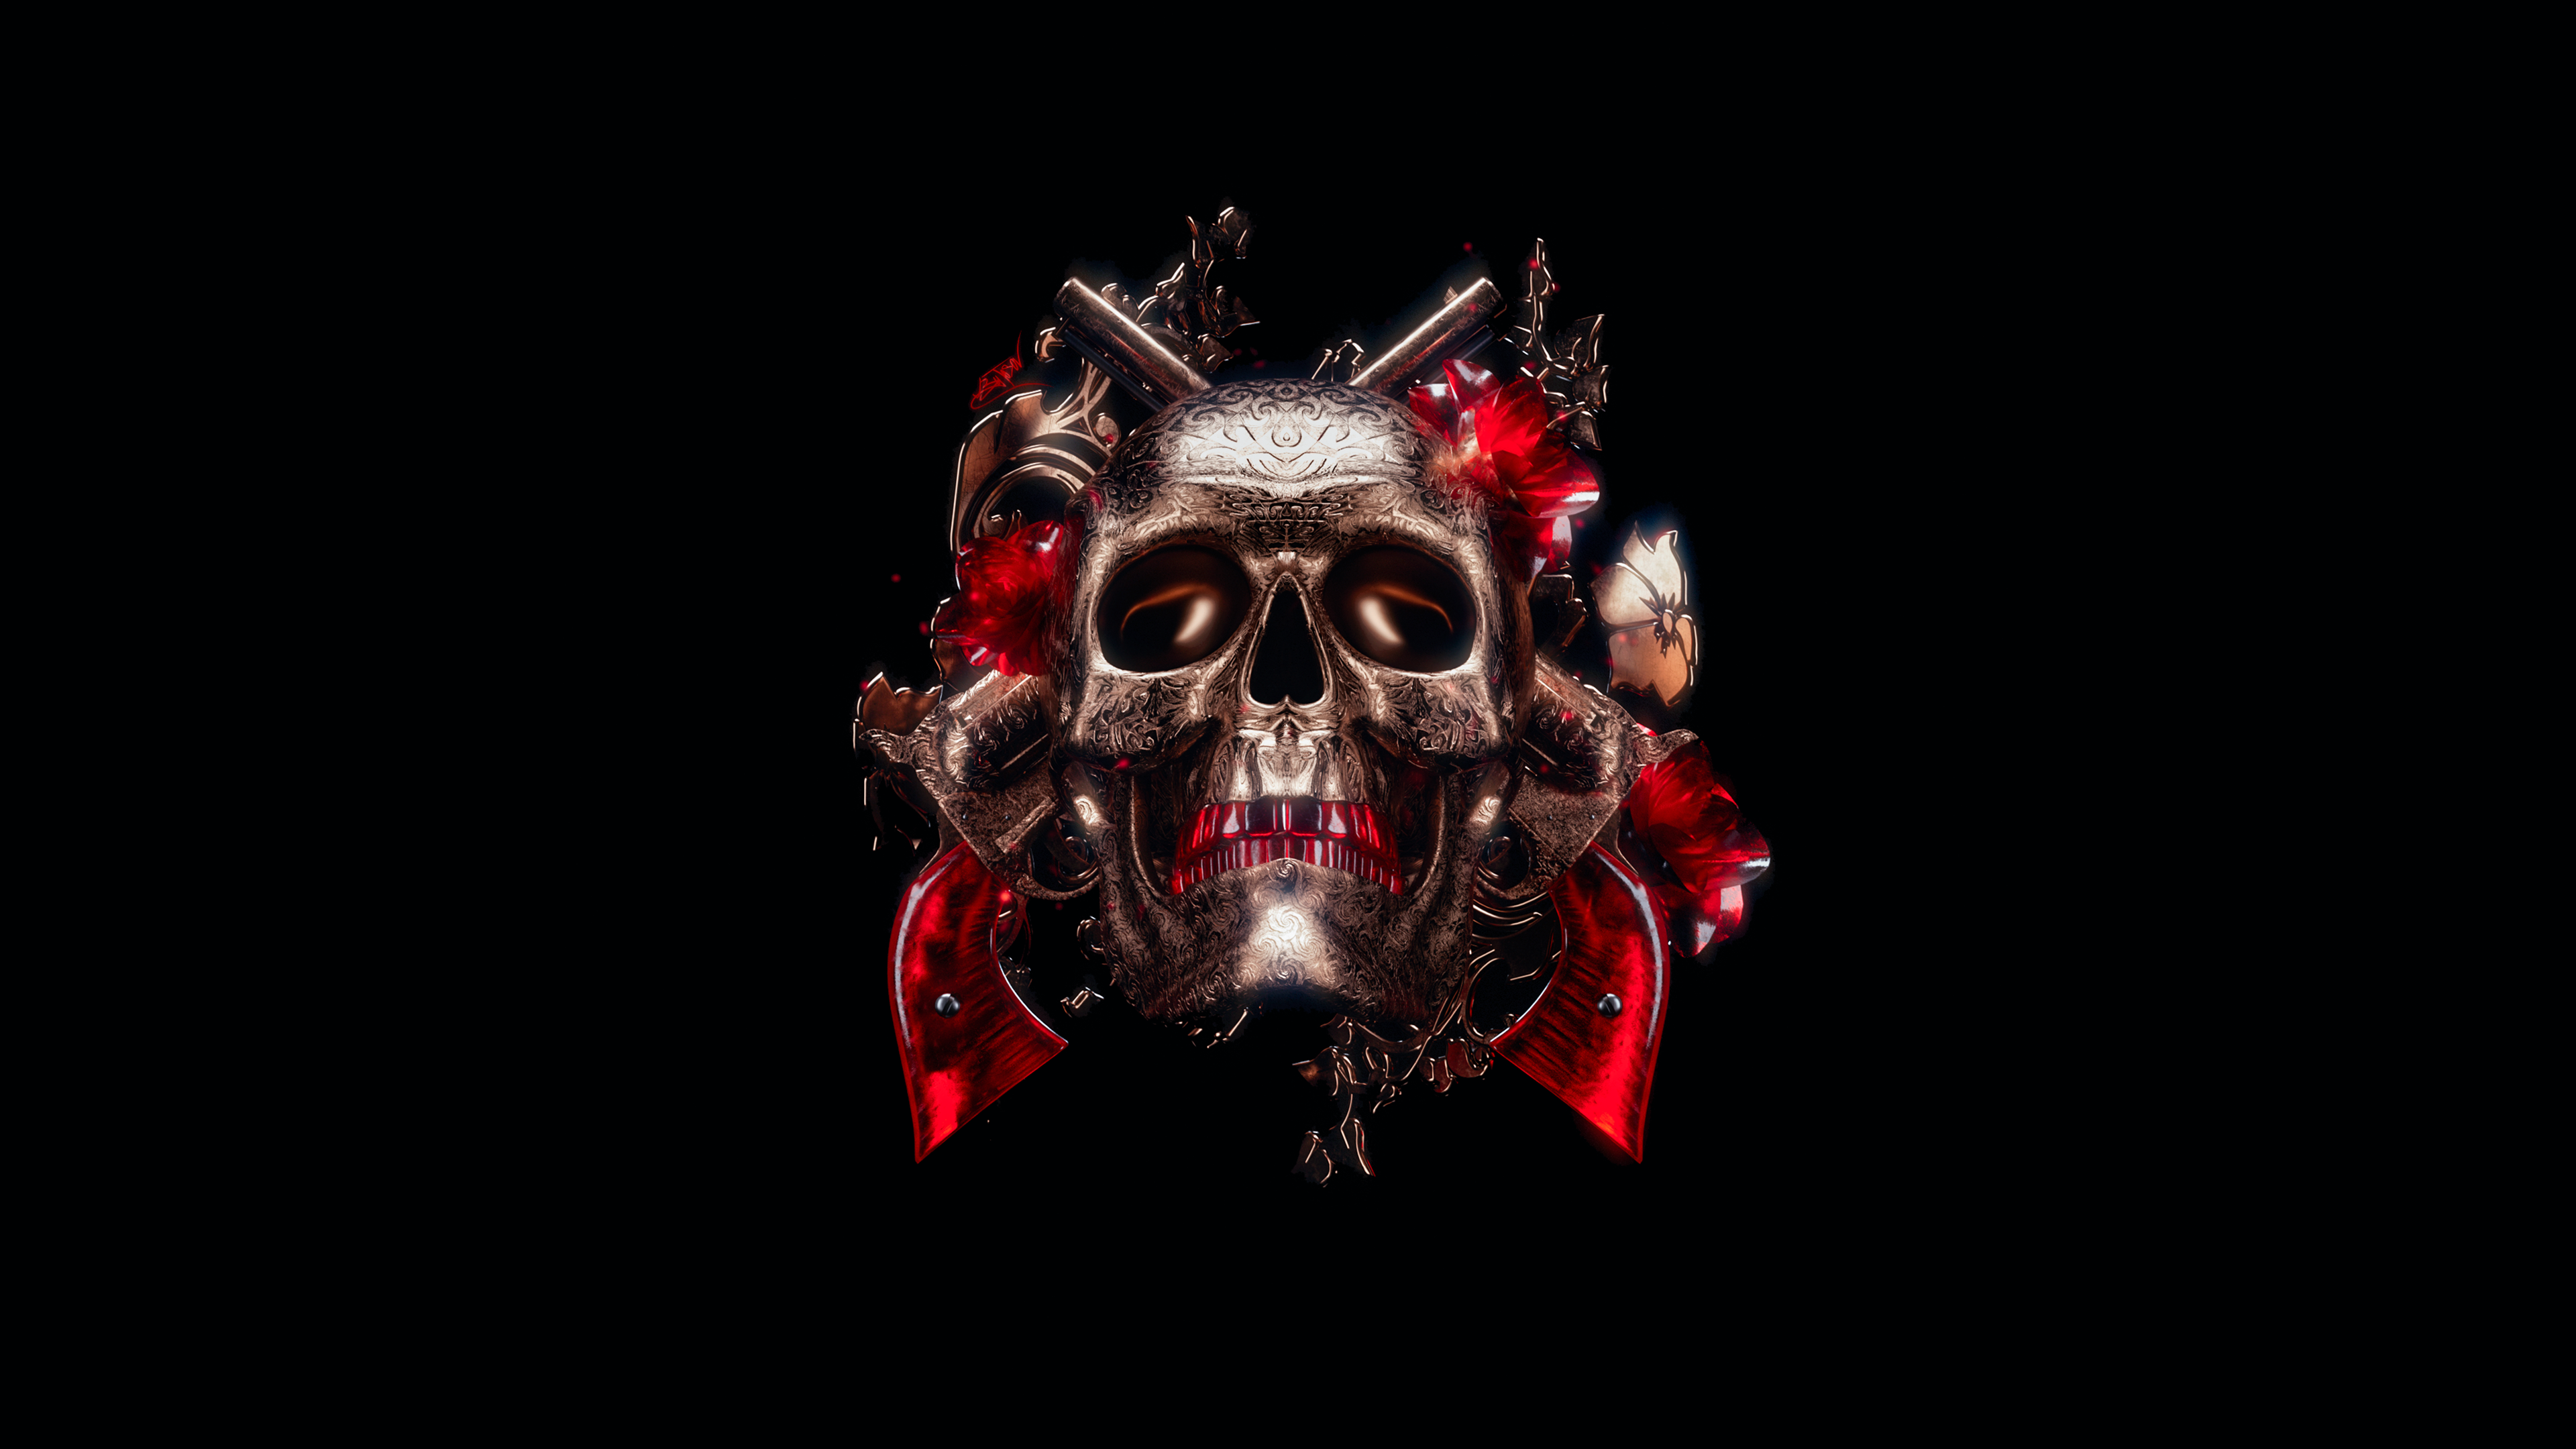 Skull 4K Wallpaper, 3D, Black background, Graphics CGI